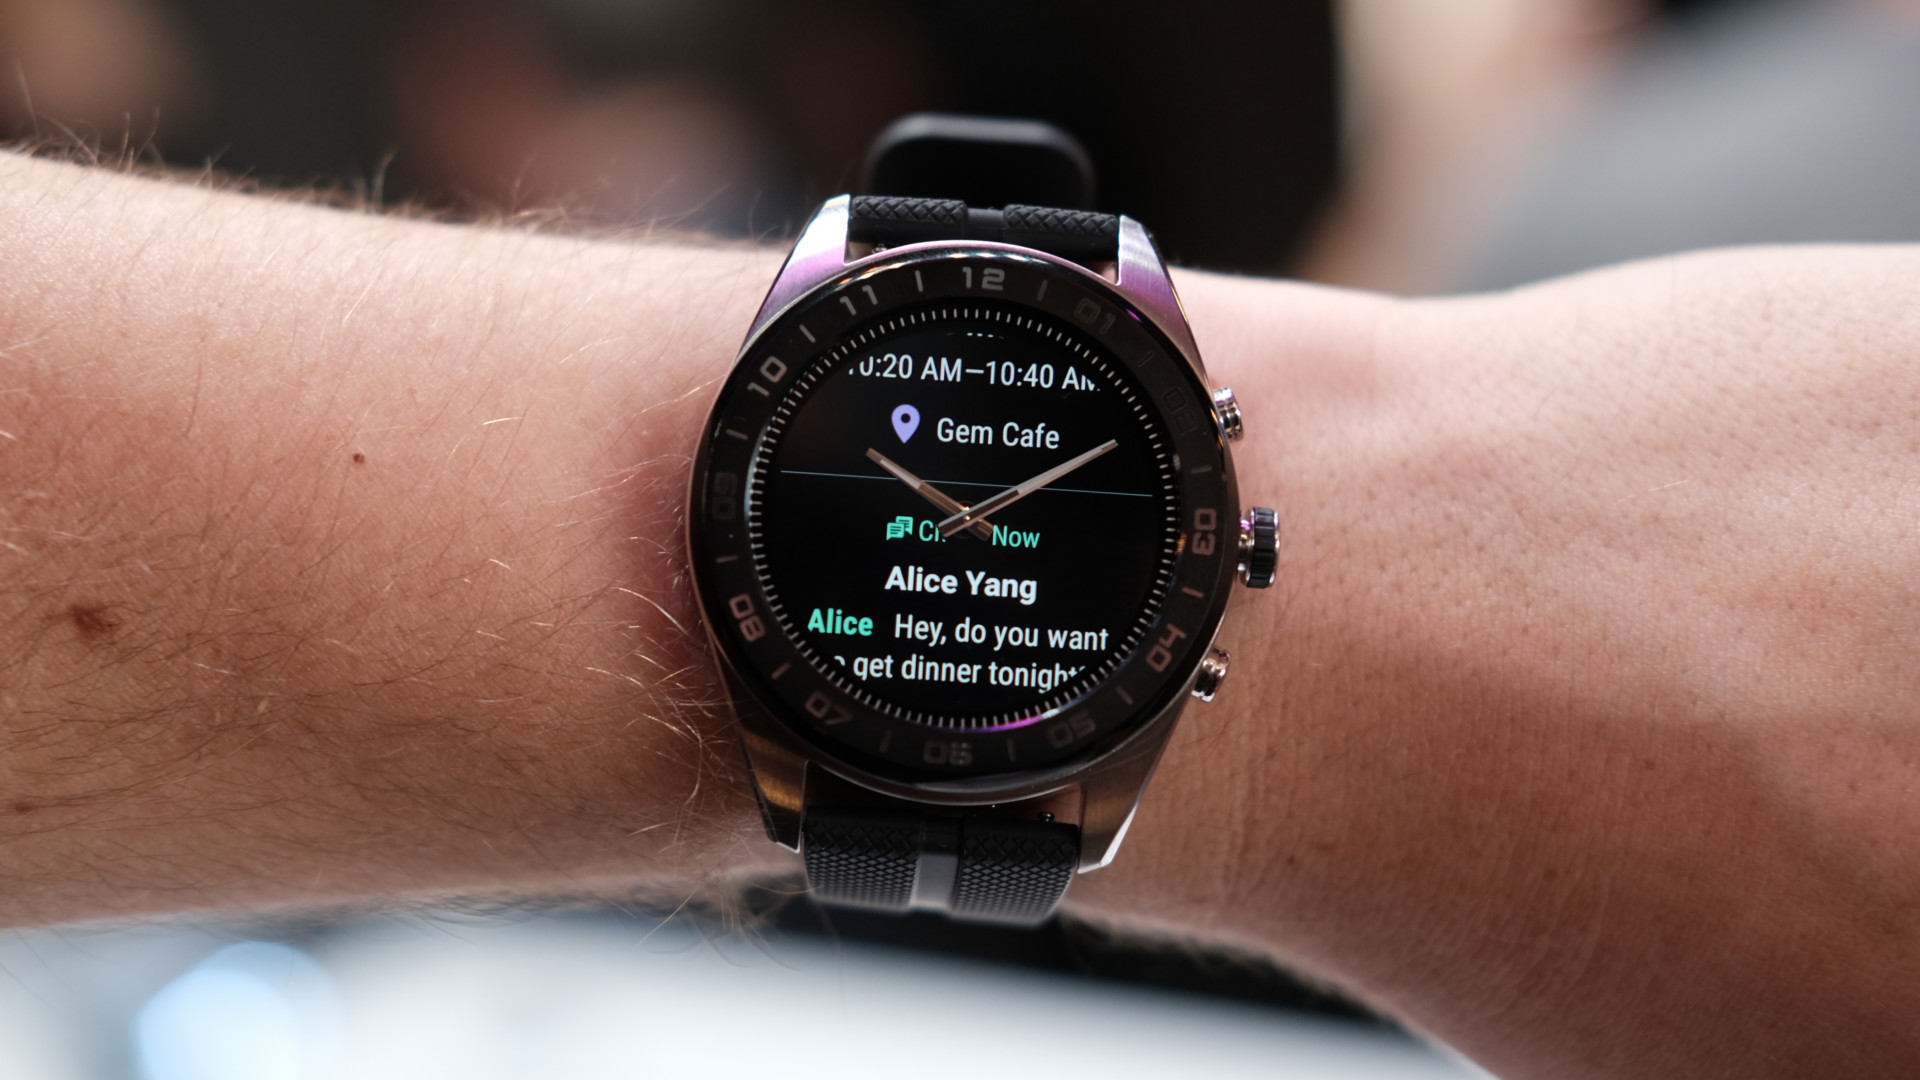 LG Watch W7 notifications